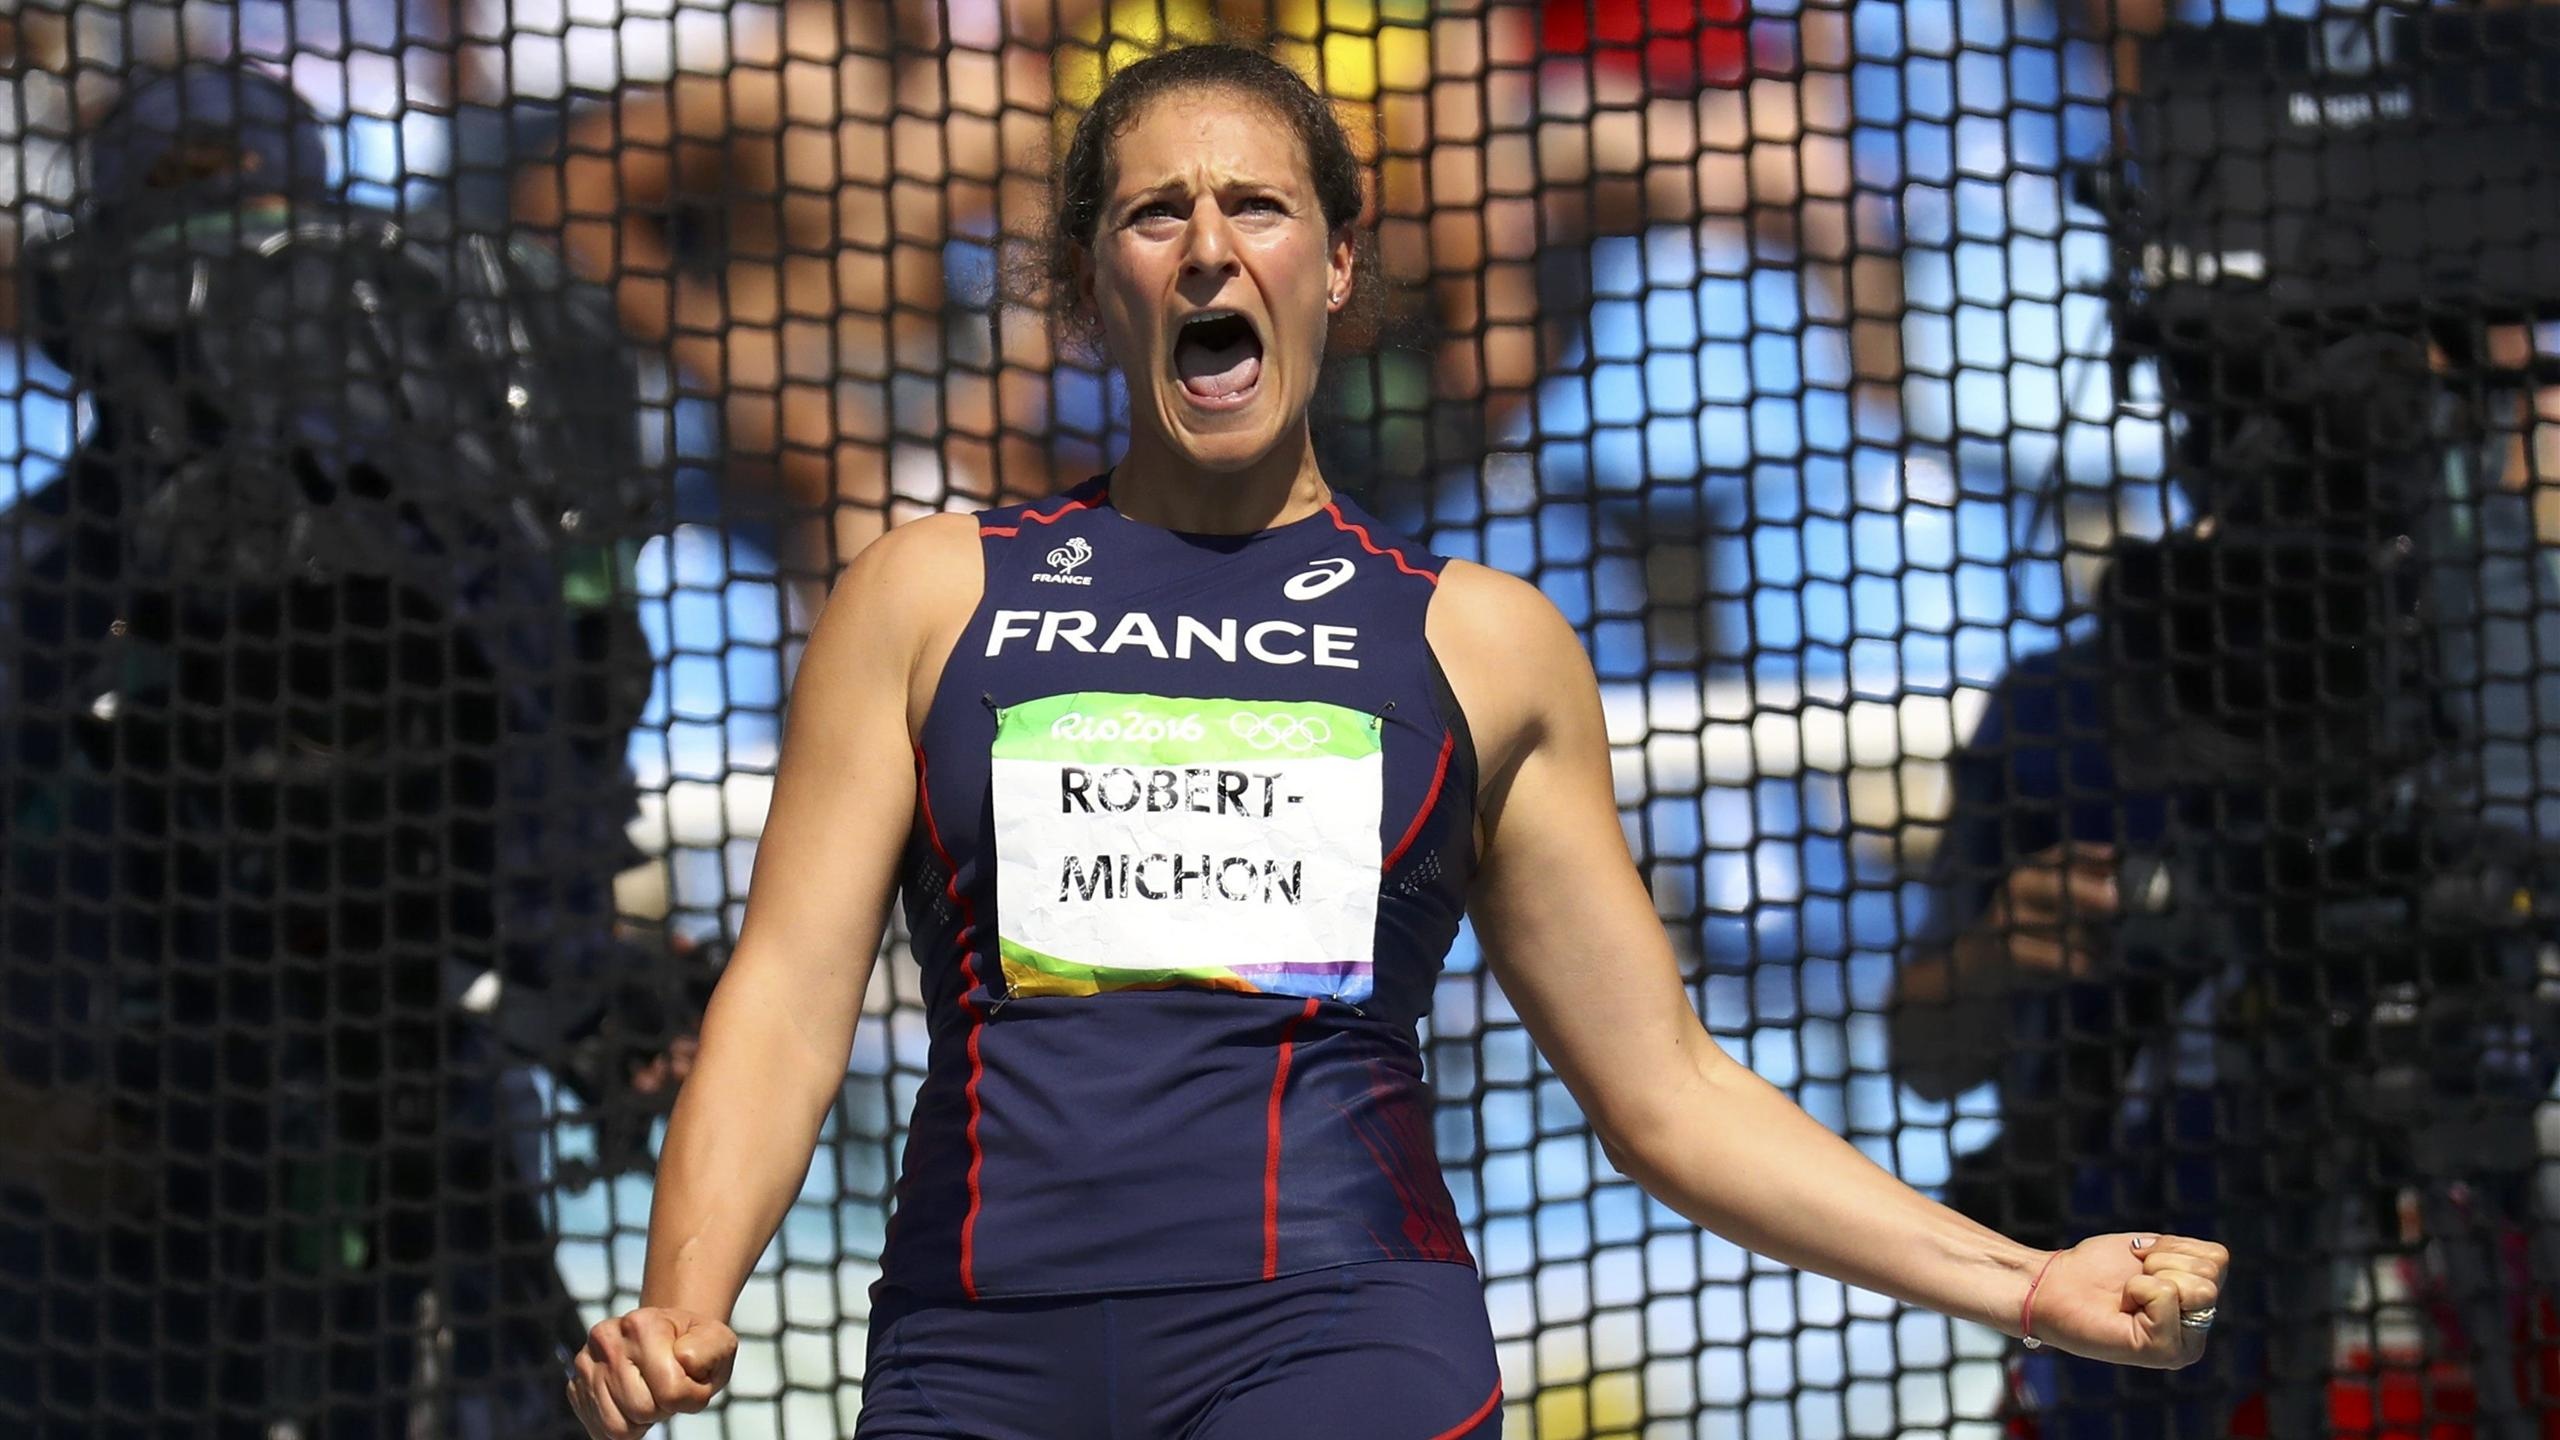 Melina Robert-Michon, Sunday program, French athlete, Eurosport coverage, 2560x1440 HD Desktop